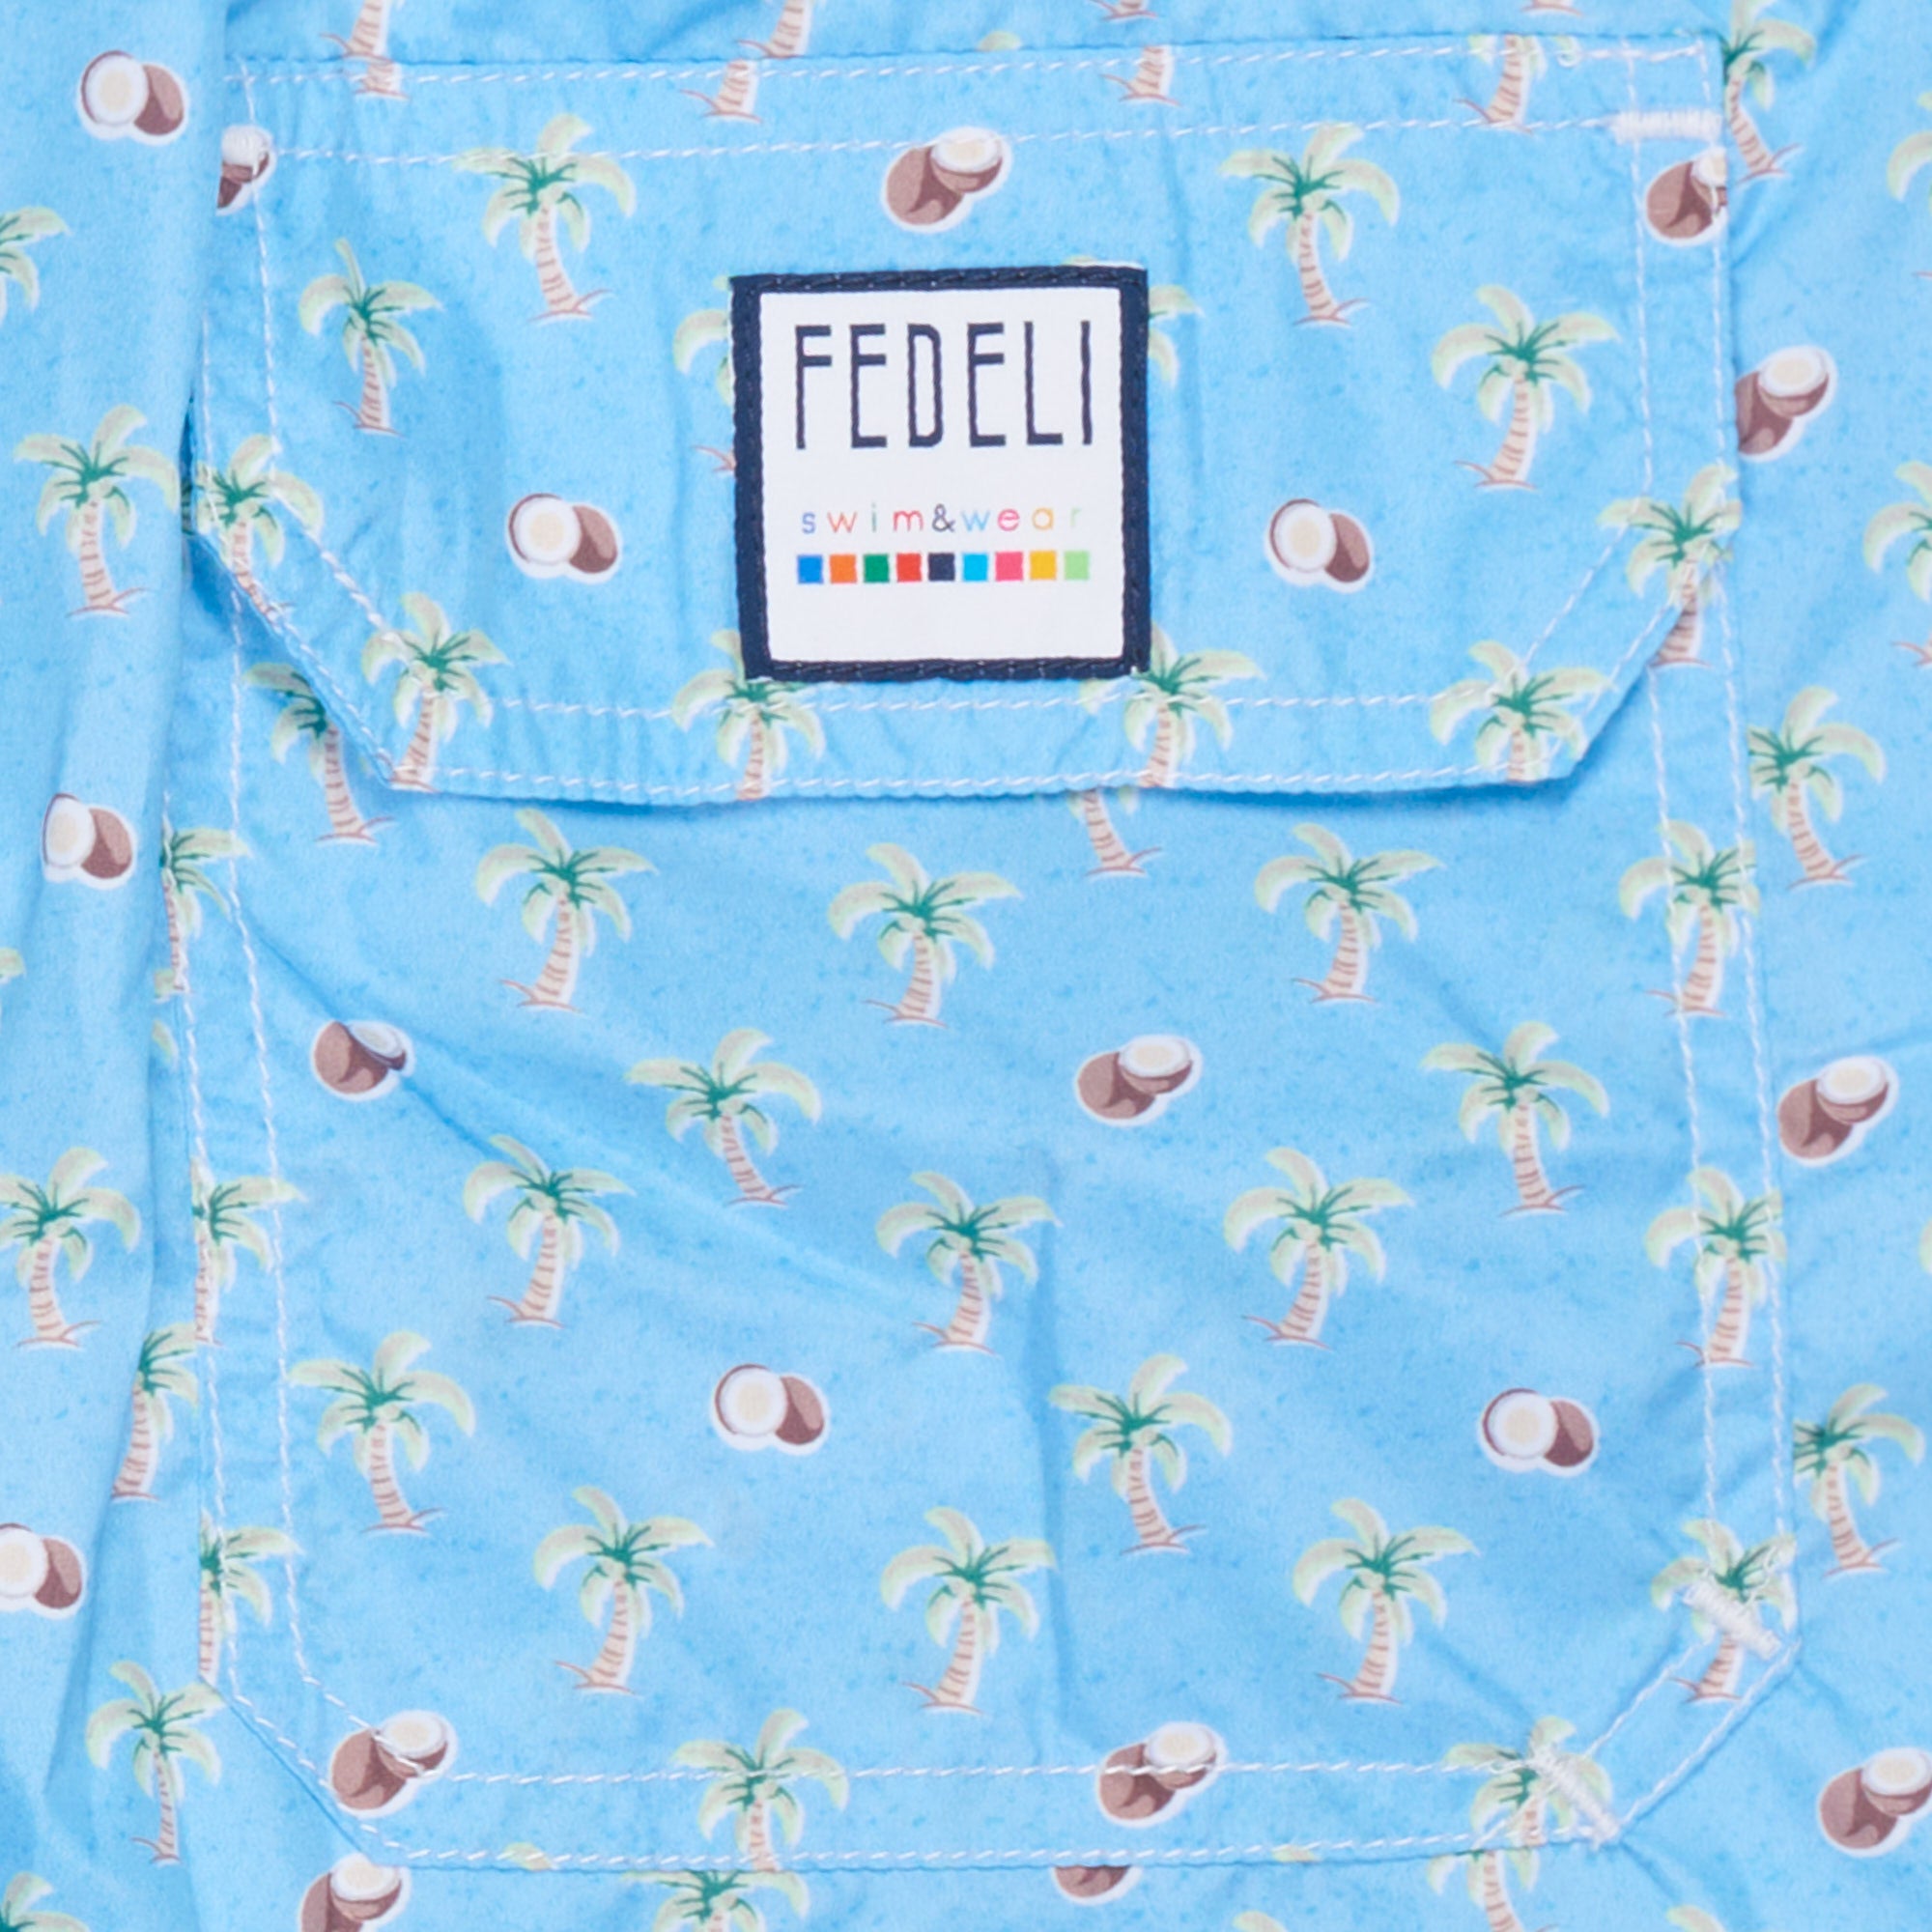 FEDELI Blue Coconut Palm Trees Print Madeira Airstop Swim Shorts Trunks NEW 3XL FEDELI